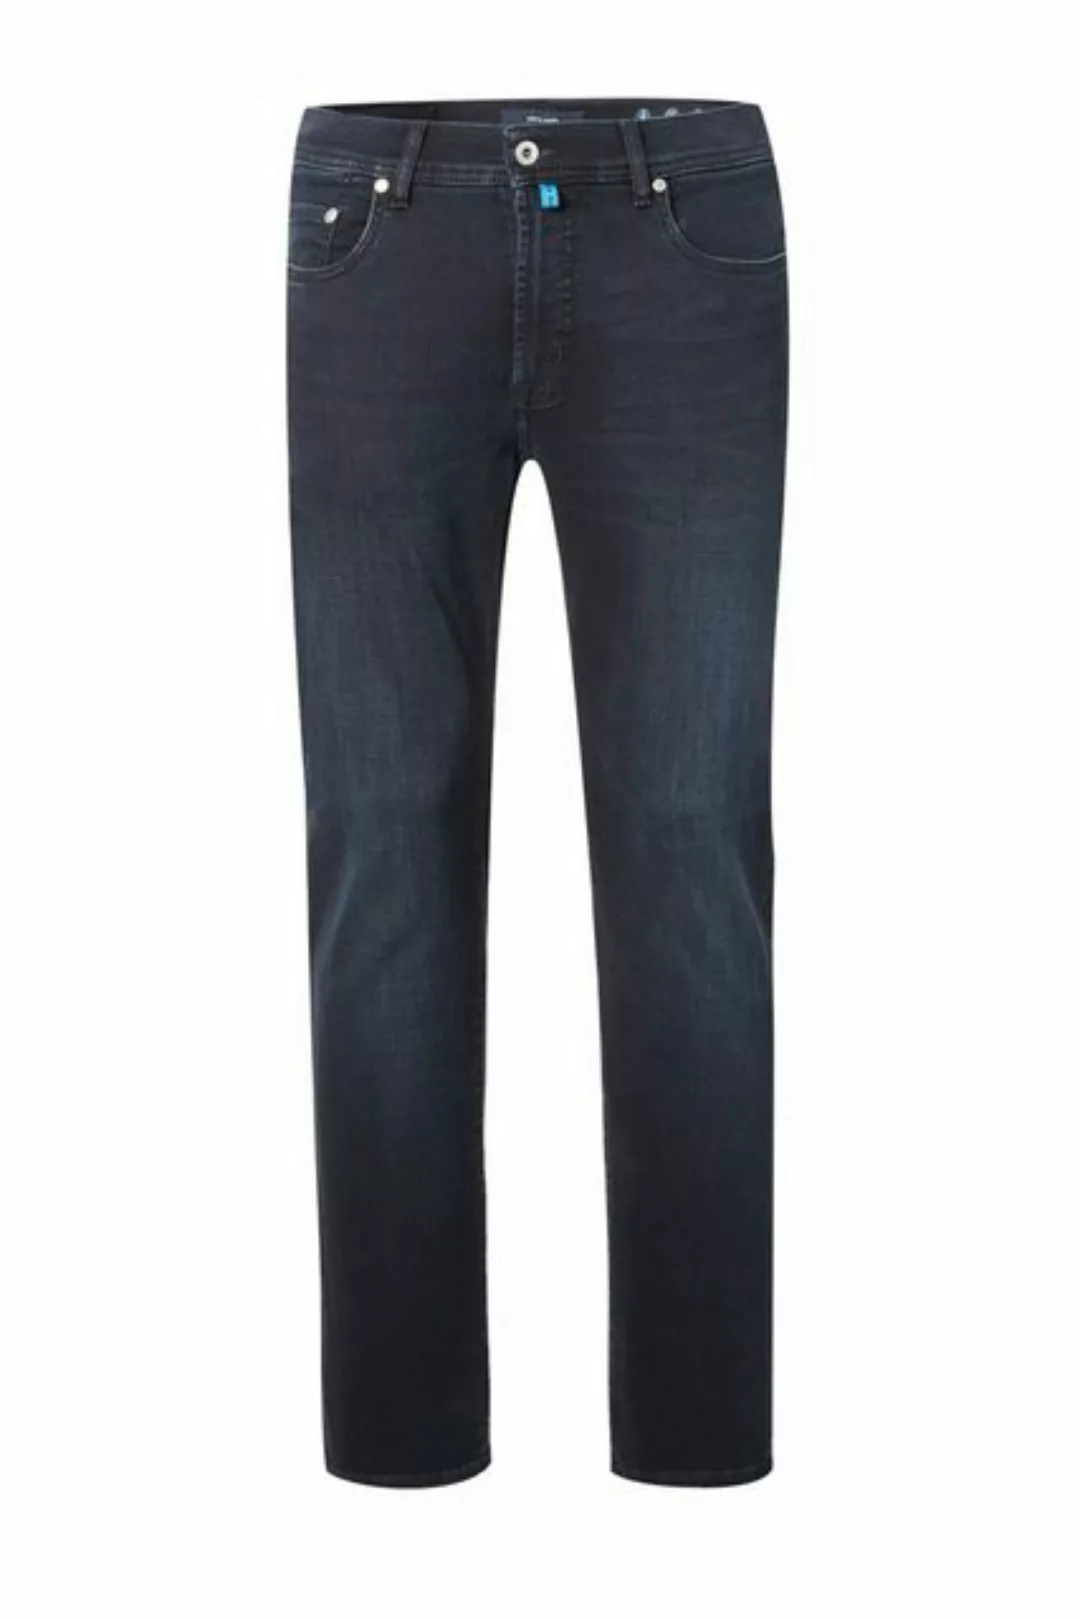 Pierre Cardin Jeans Lyon 30915/000/07721/01 günstig online kaufen